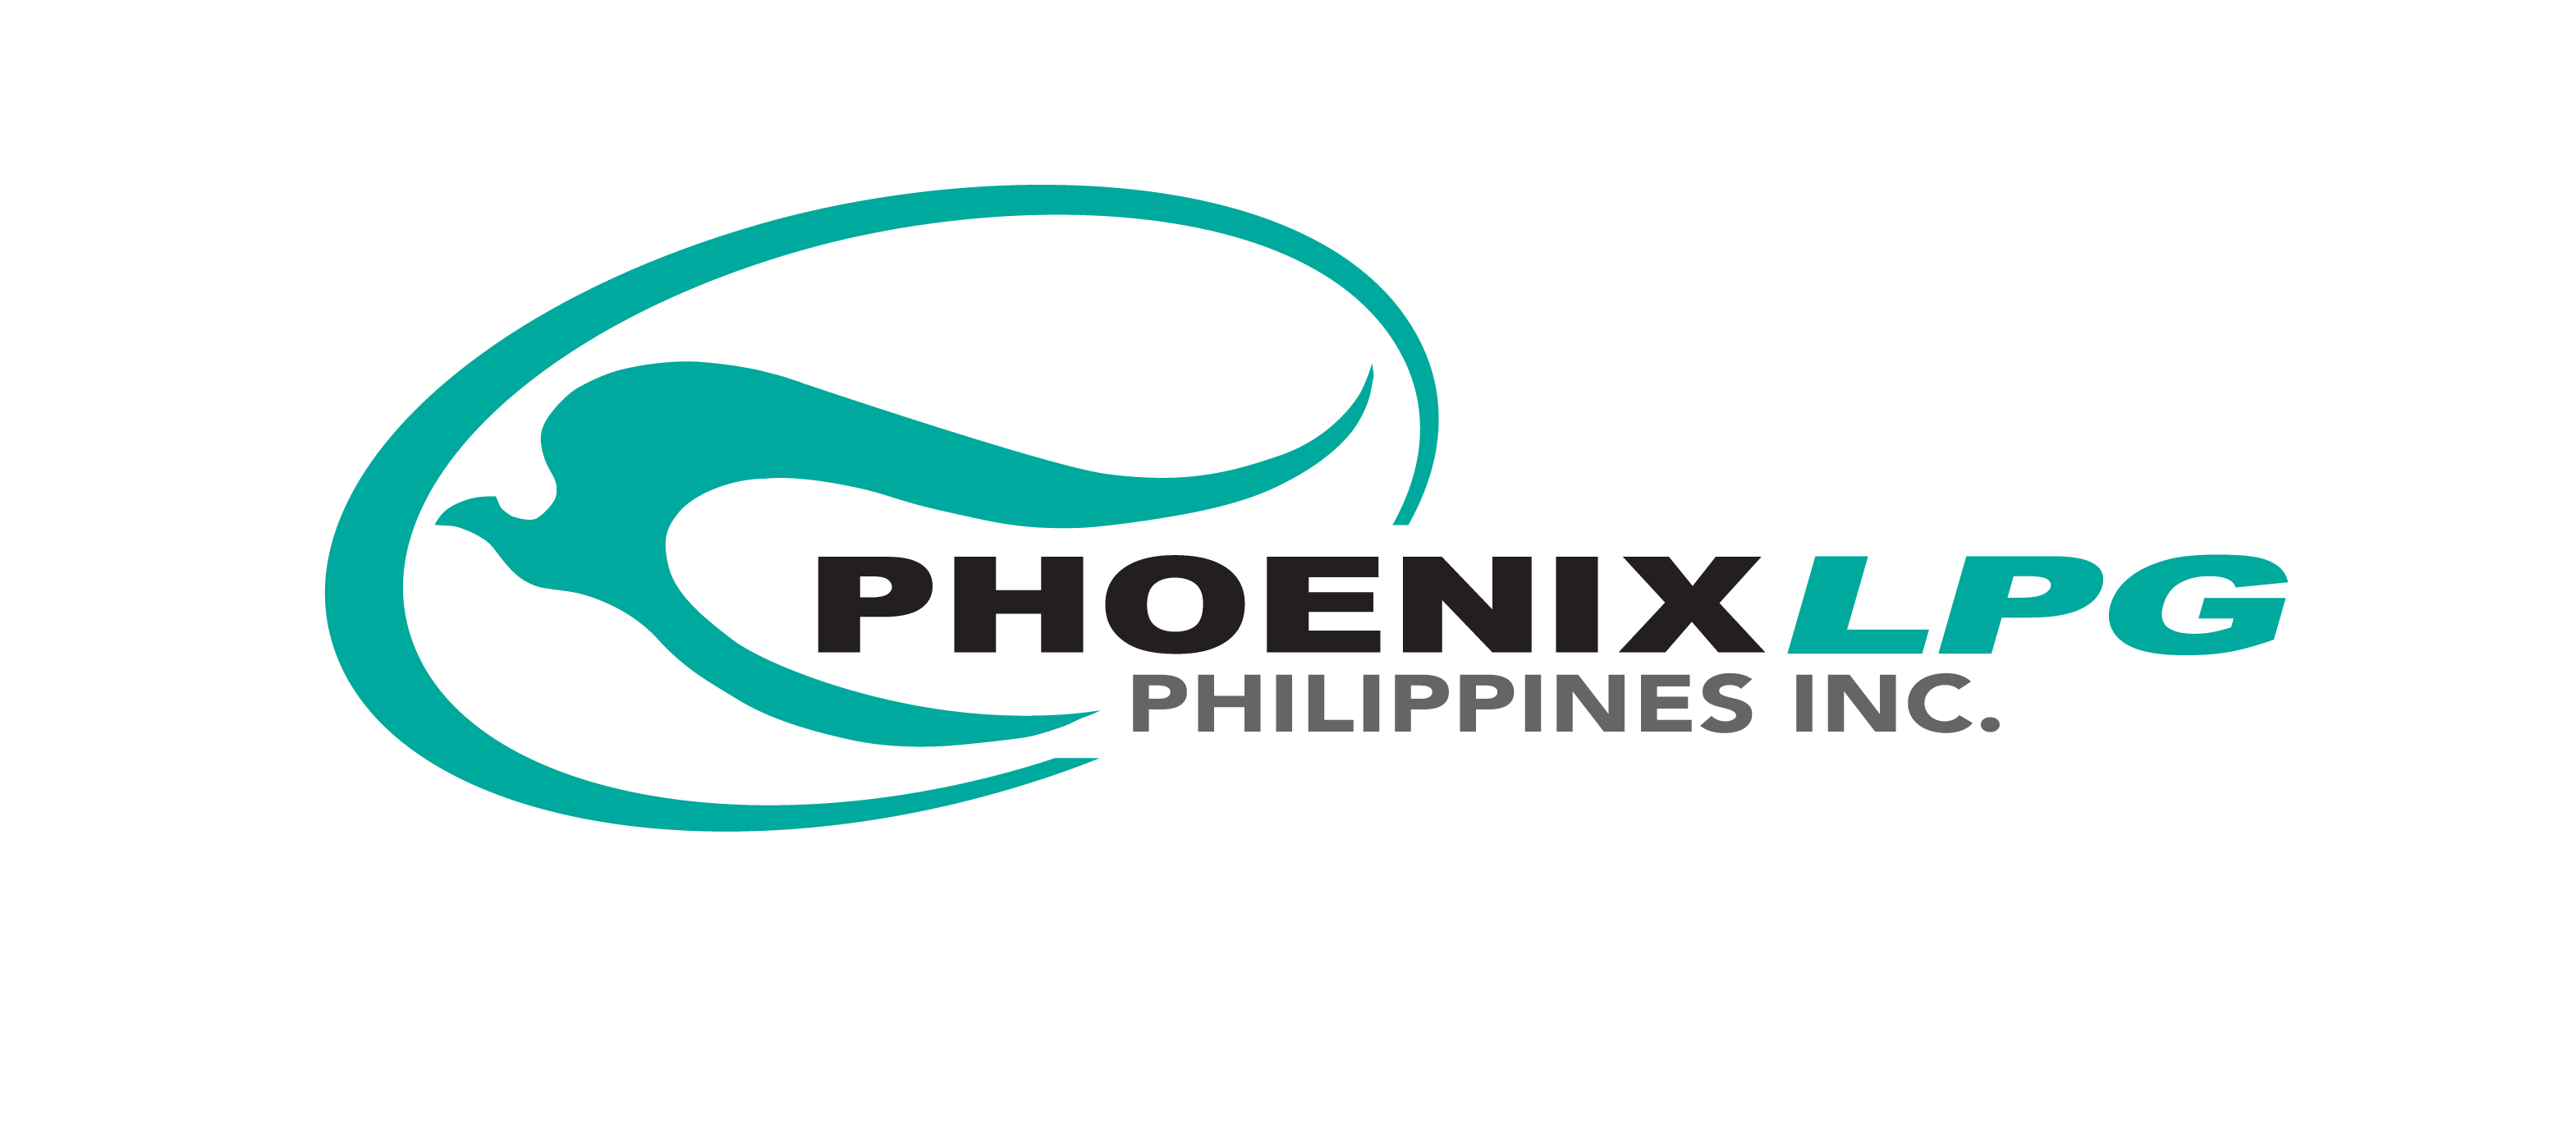 LPG Logo - Phoenix LPG Autogas Logo